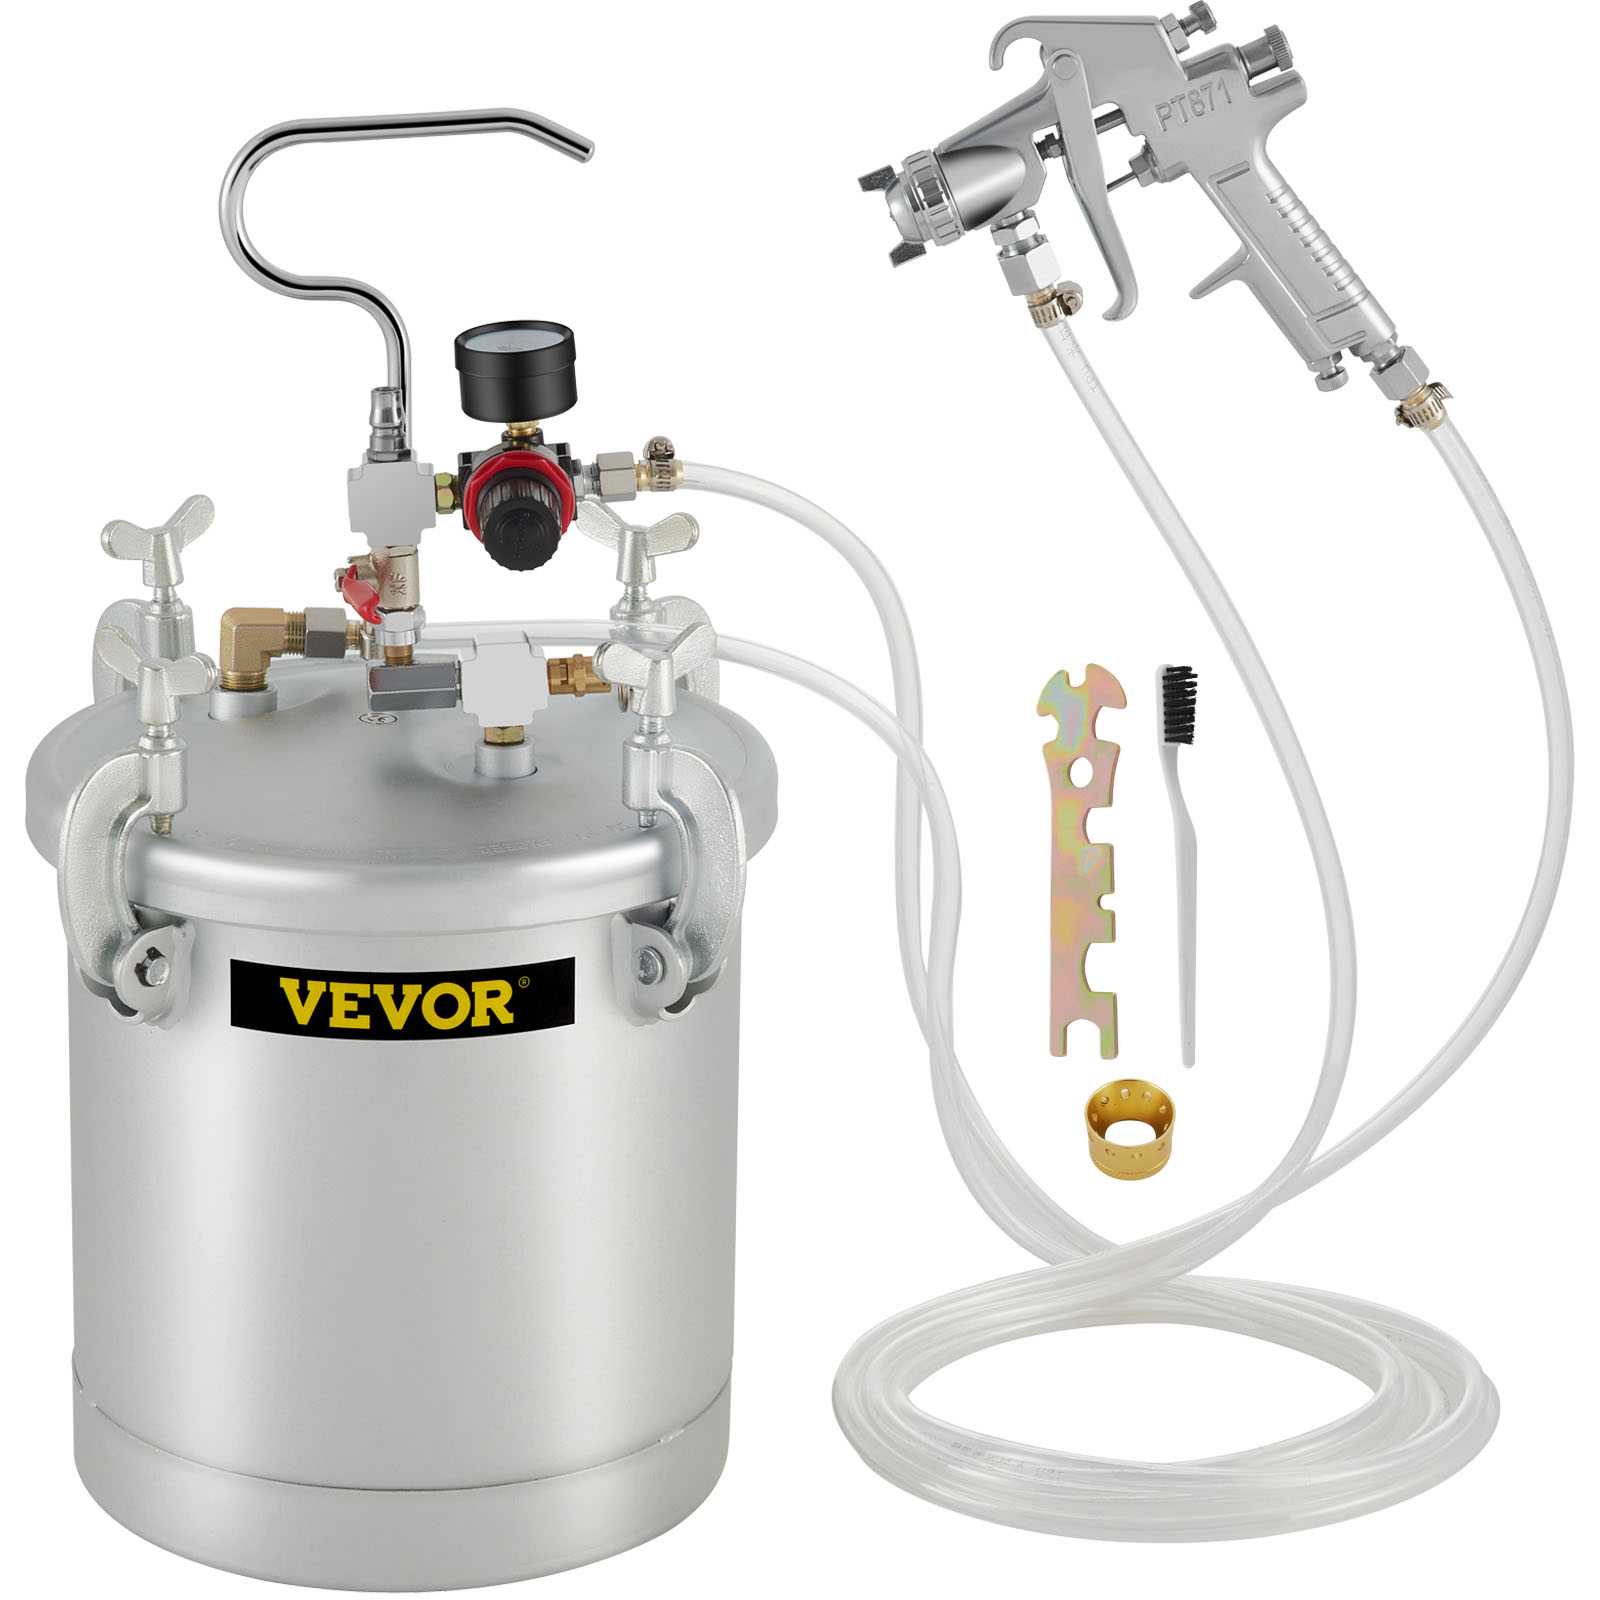 VEVOR Air Spray Kit Paint Gravity Feed LVLP 1.3/1.4/1.8 mm Nozzle